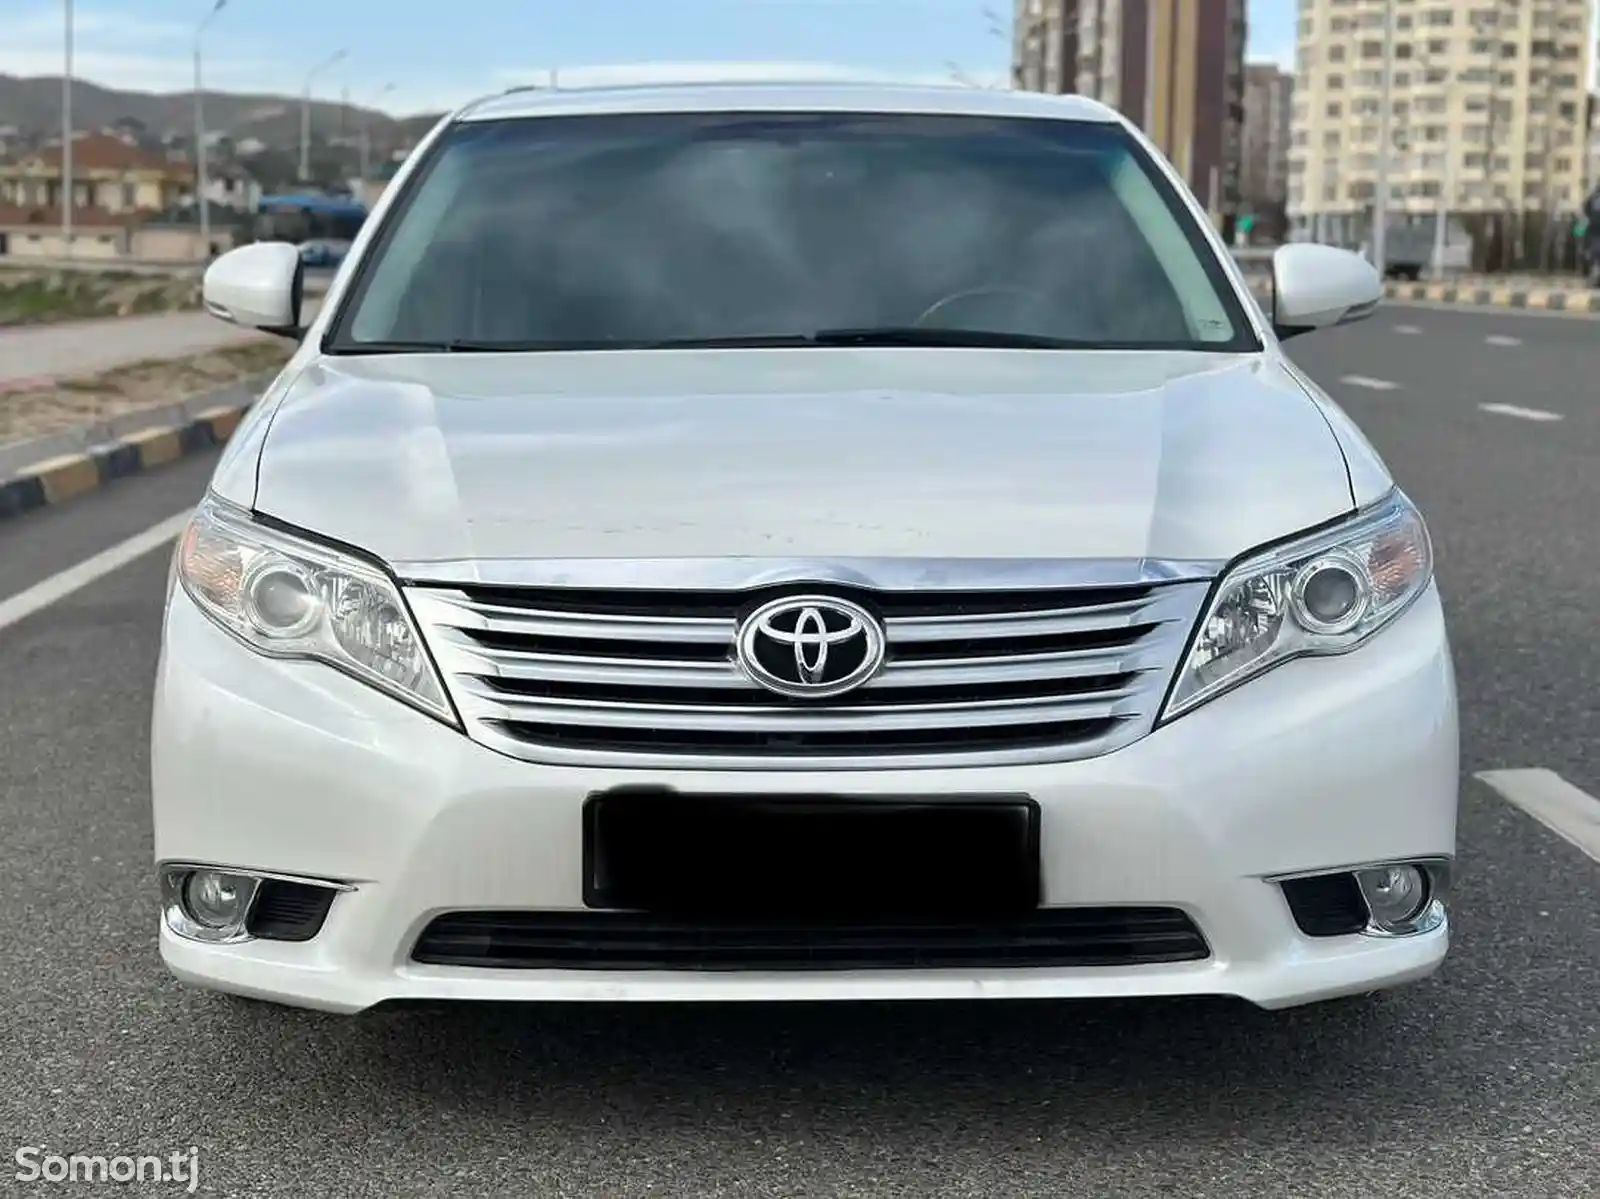 Toyota Avalon, 2011-2